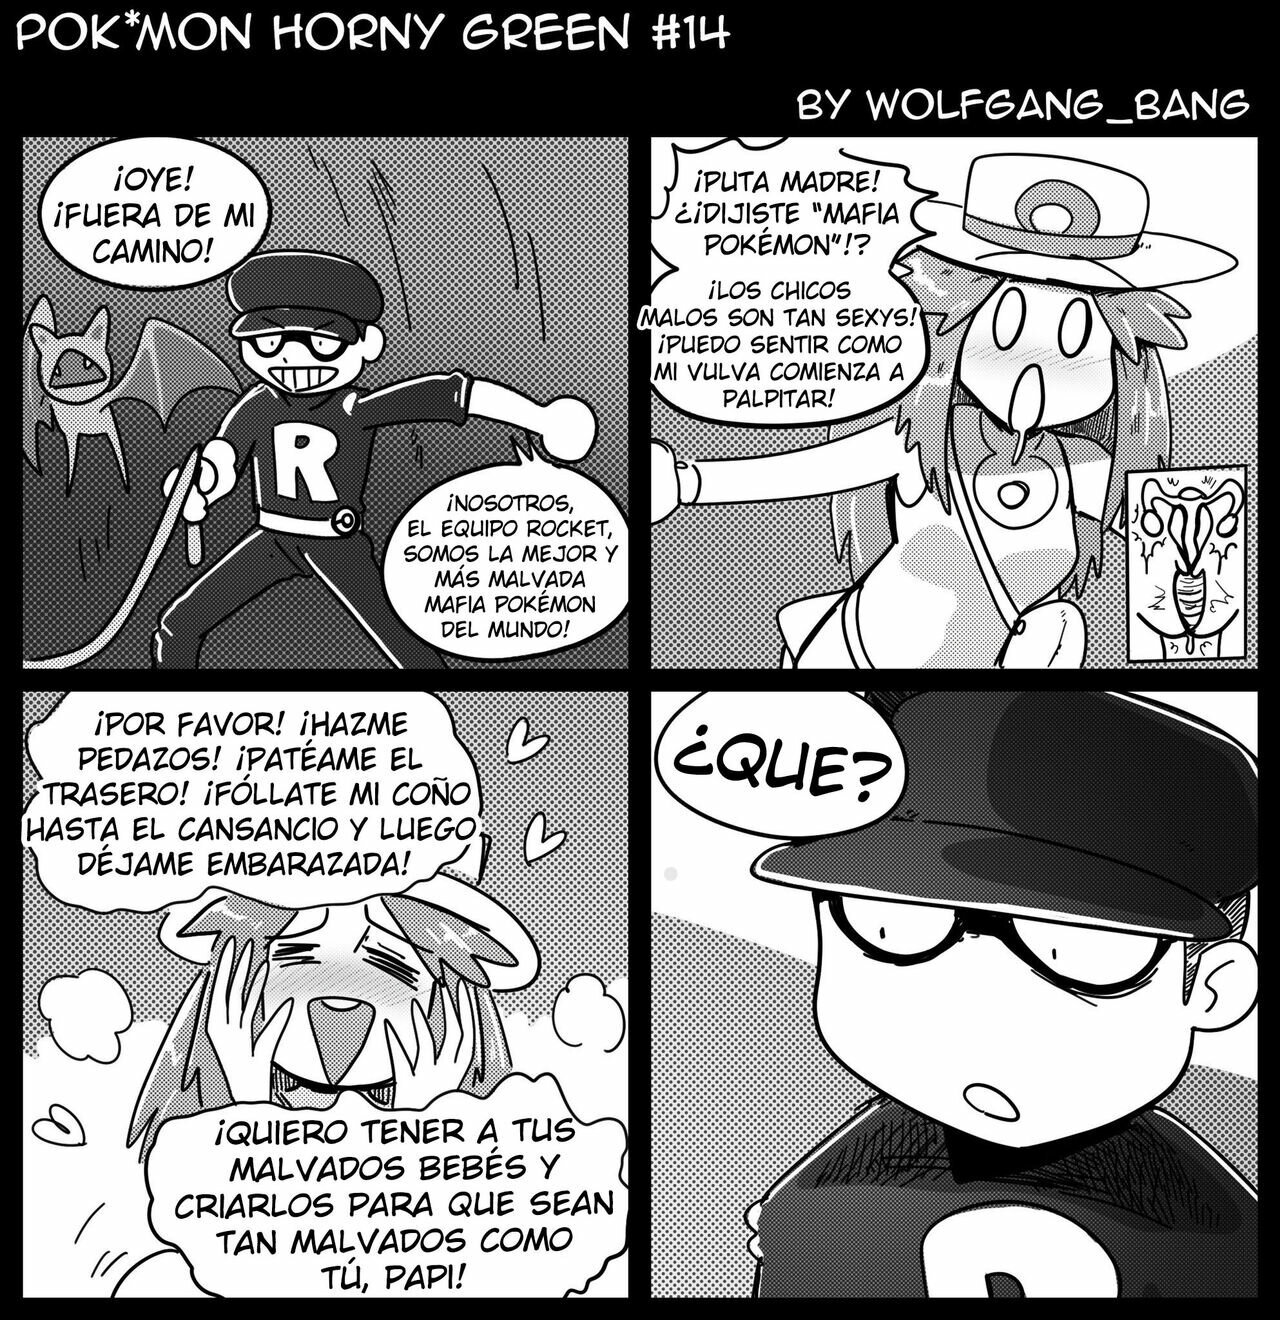 Pokemon HornyGreen by Wolfrad Senpai - 14